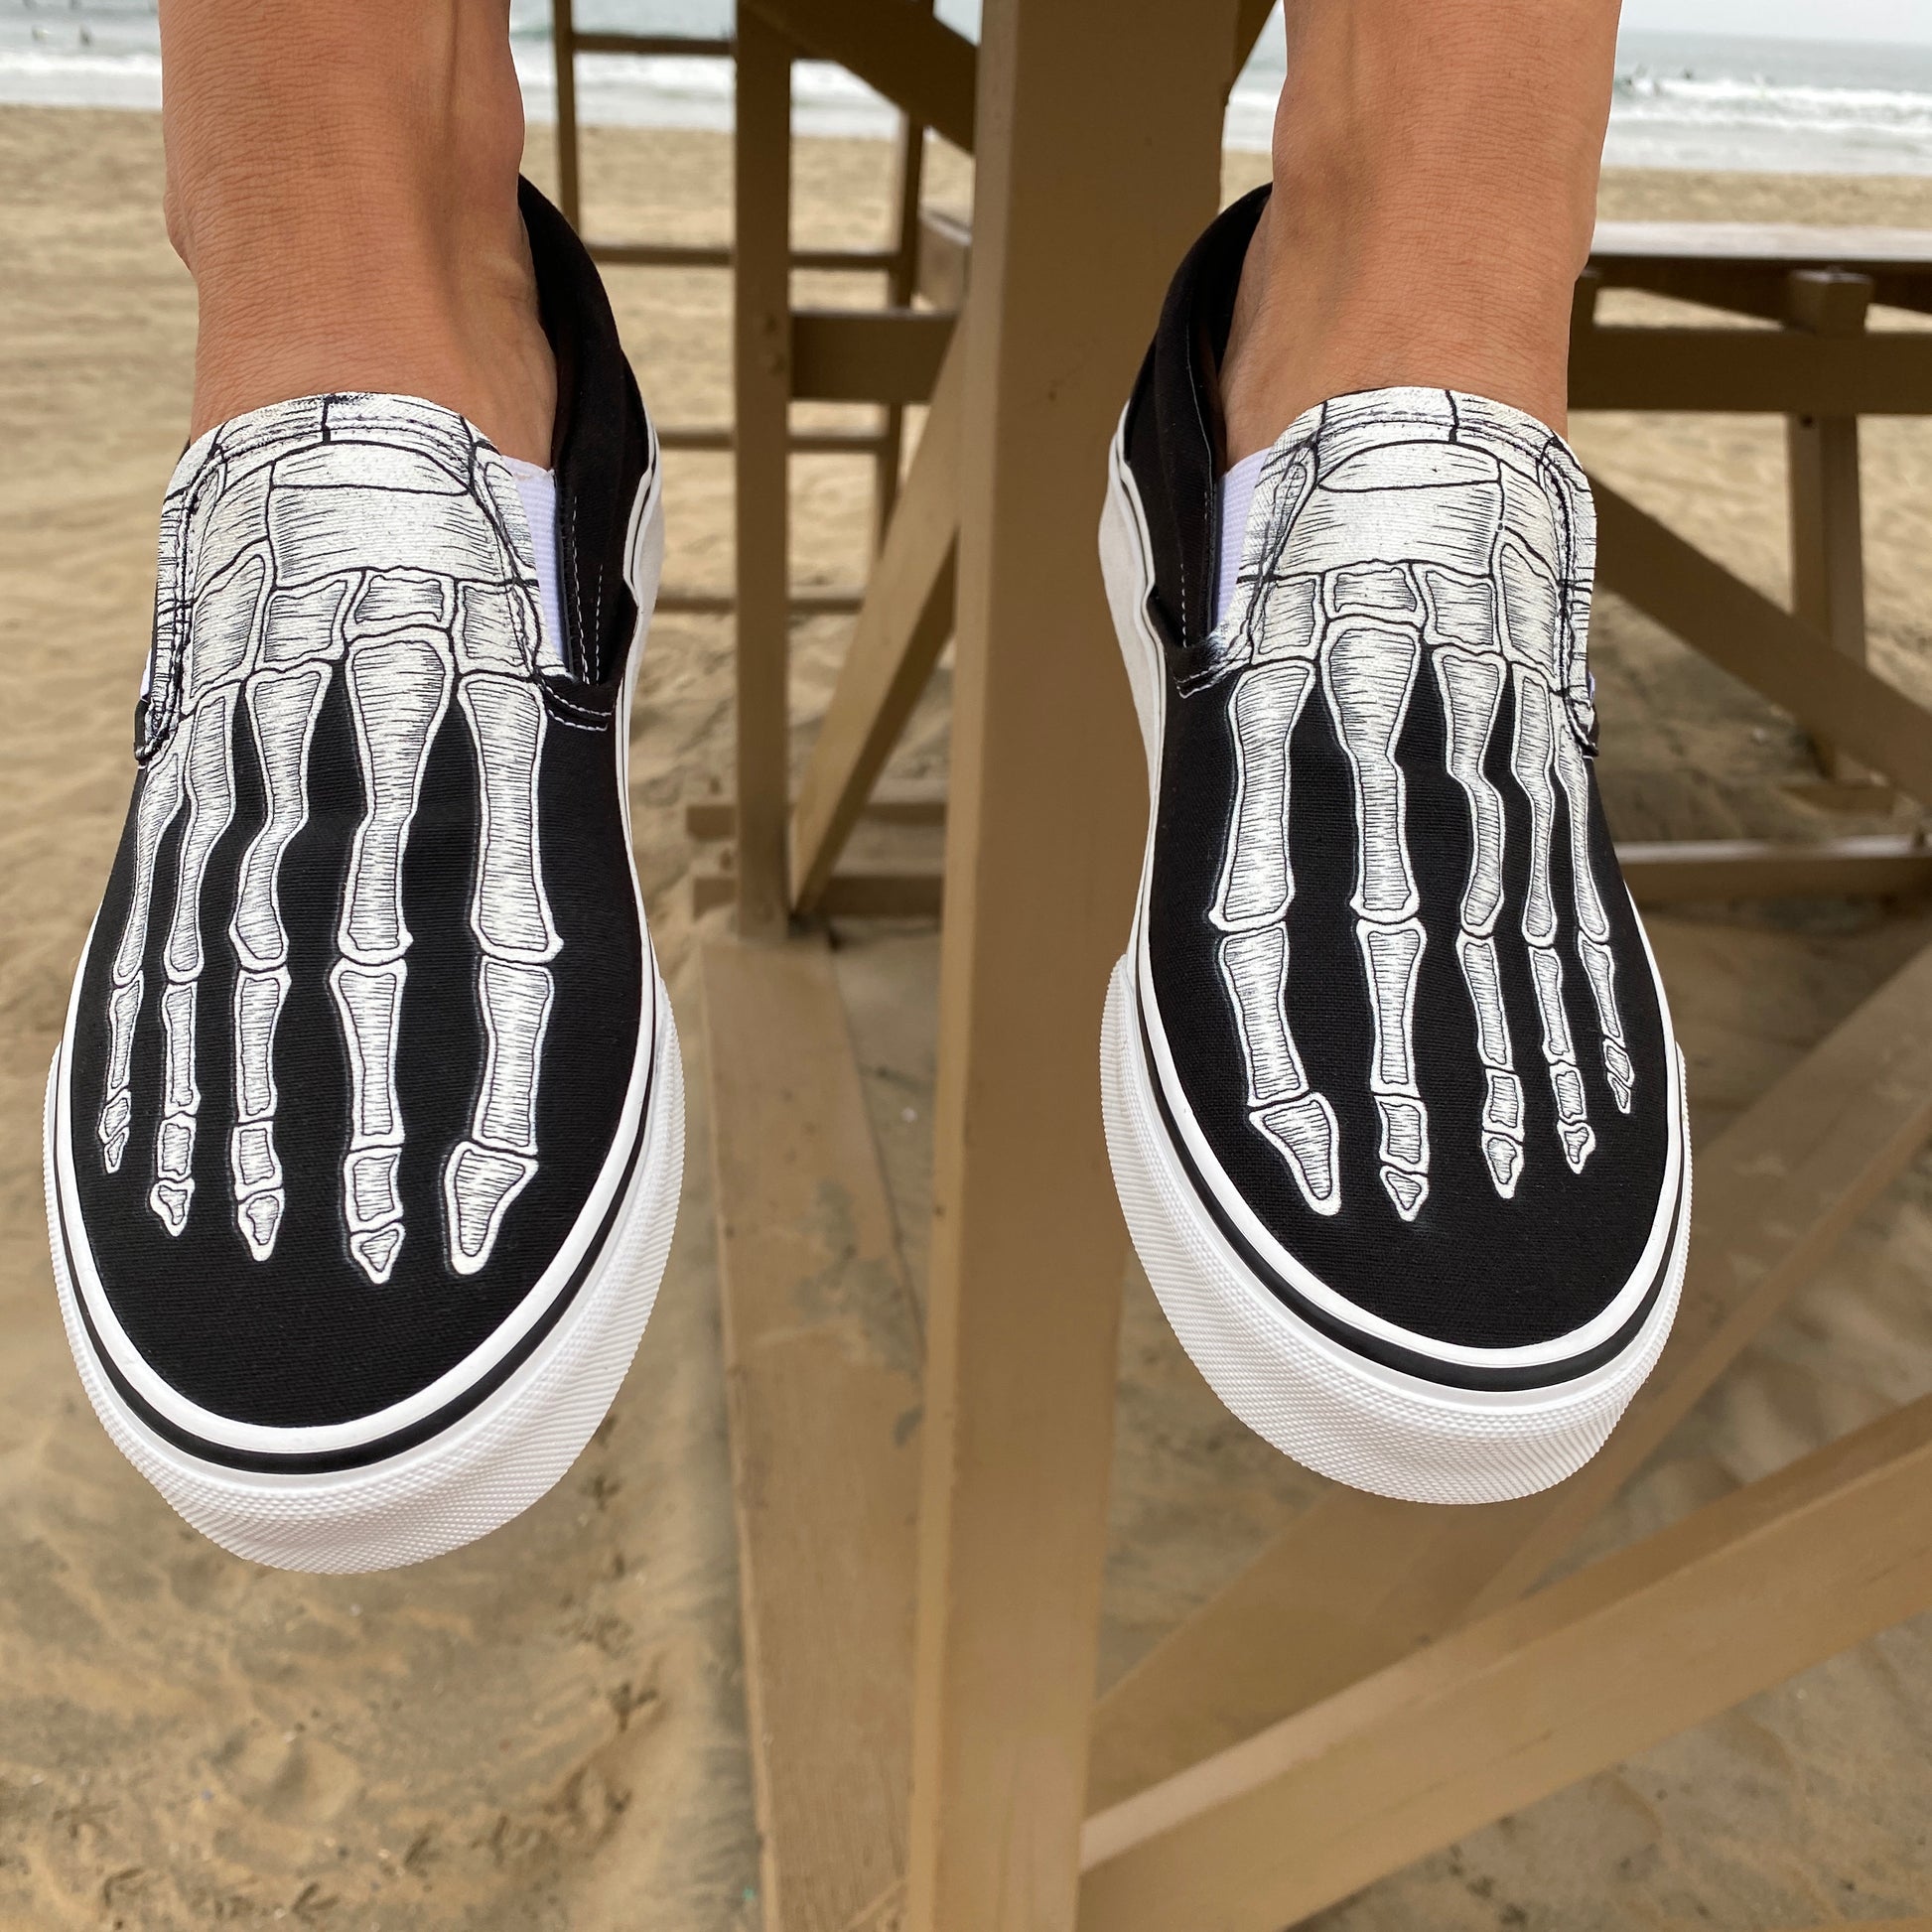 skeleton feet shoes